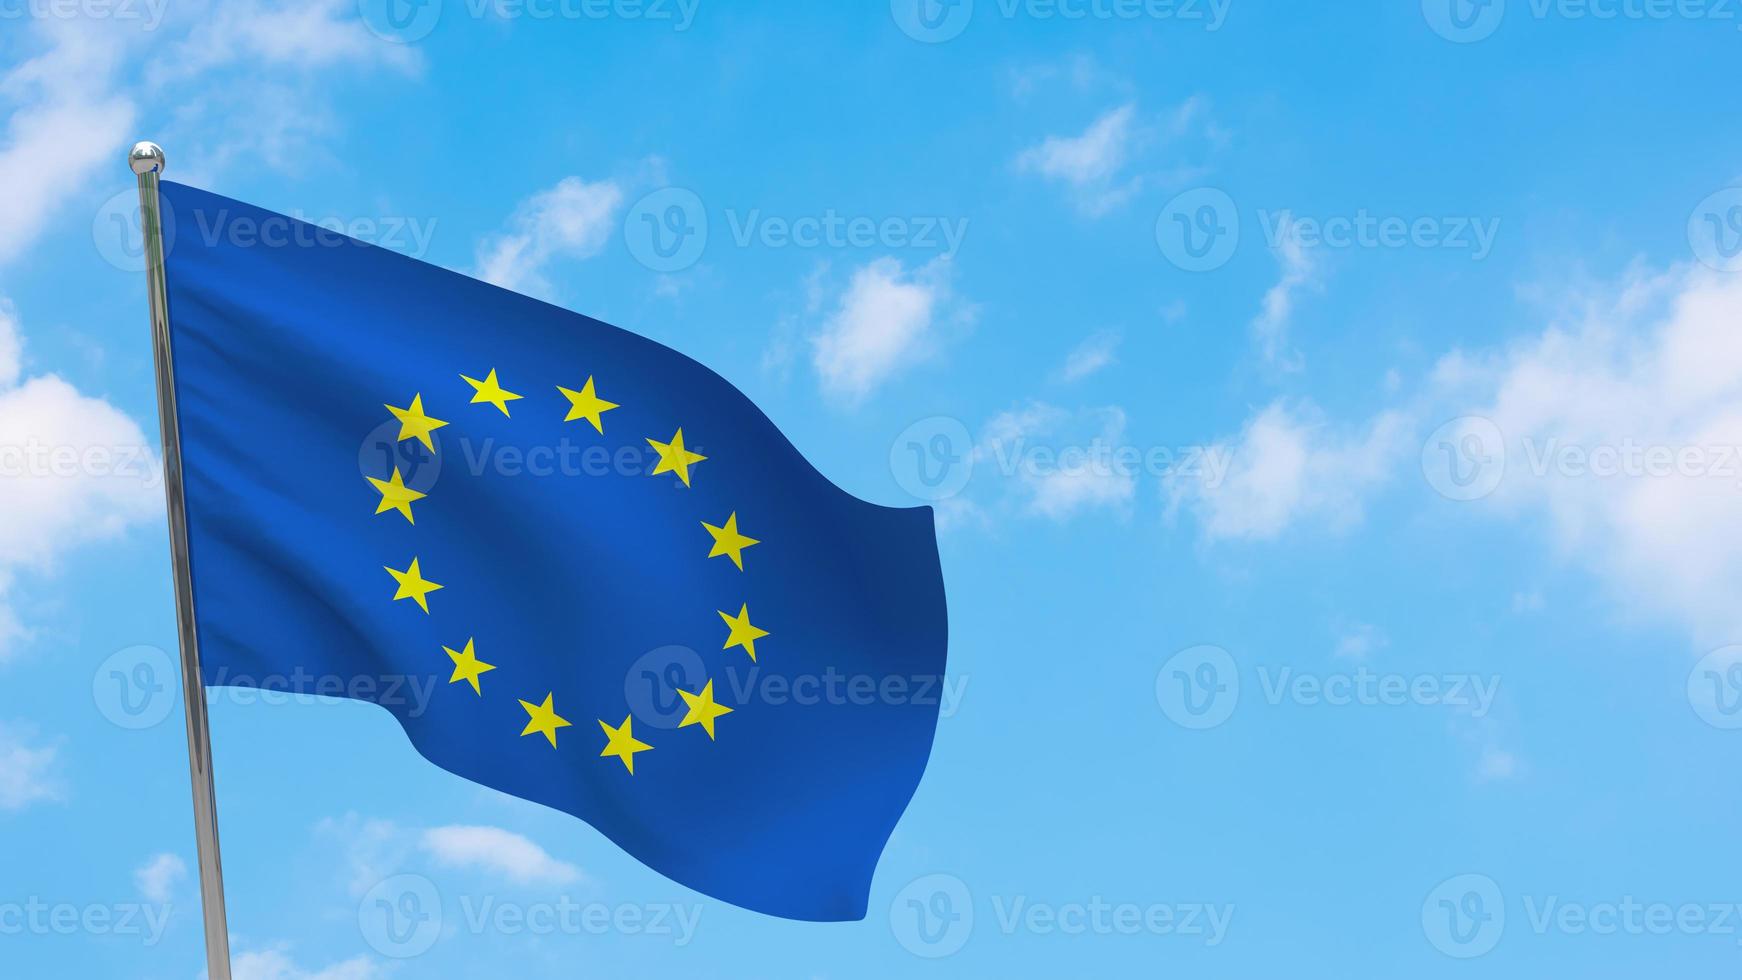 europa eu-flagga på stång foto